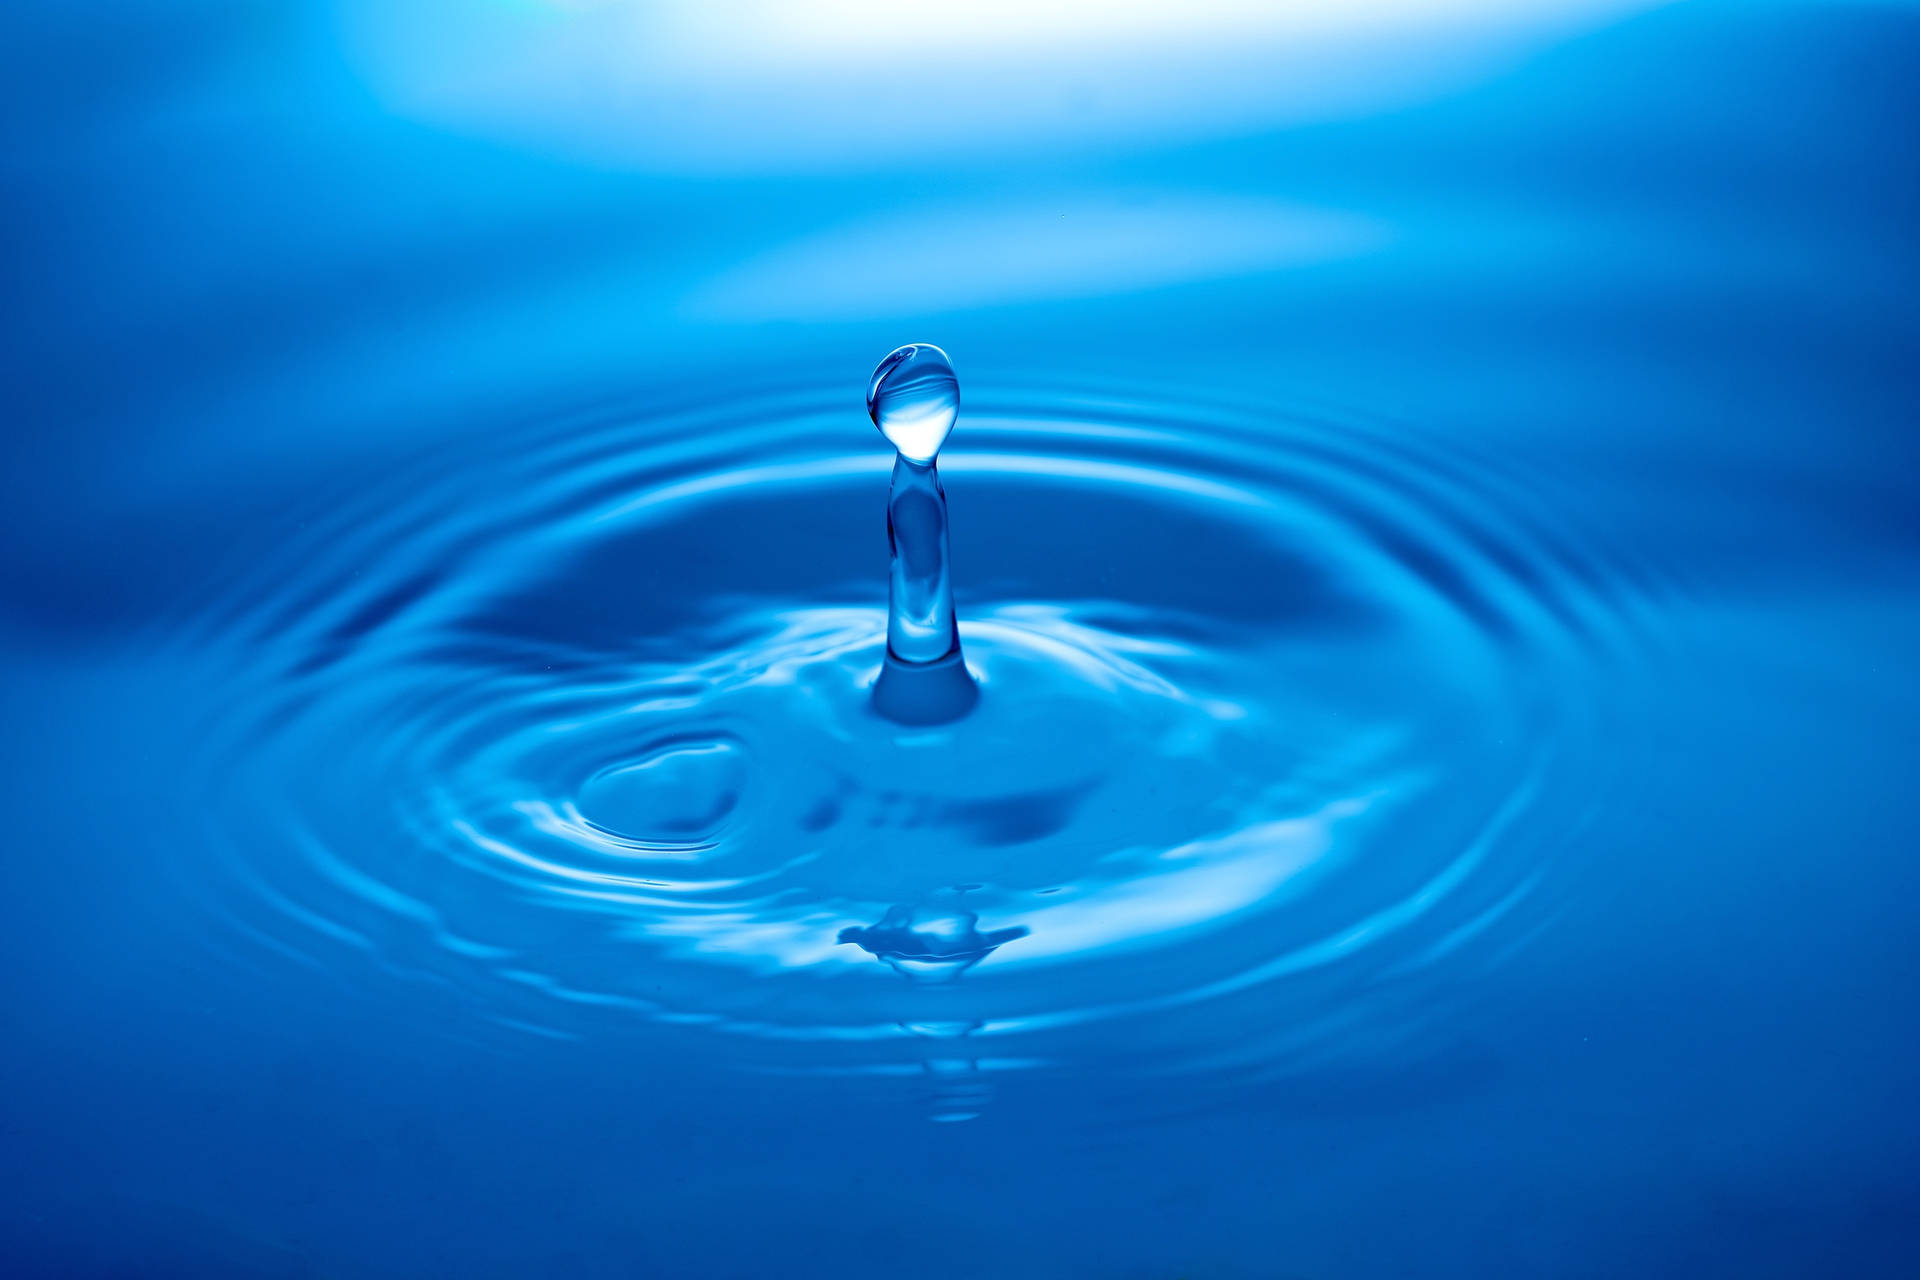 Aesthetic Blue Water Droplet Wallpaper